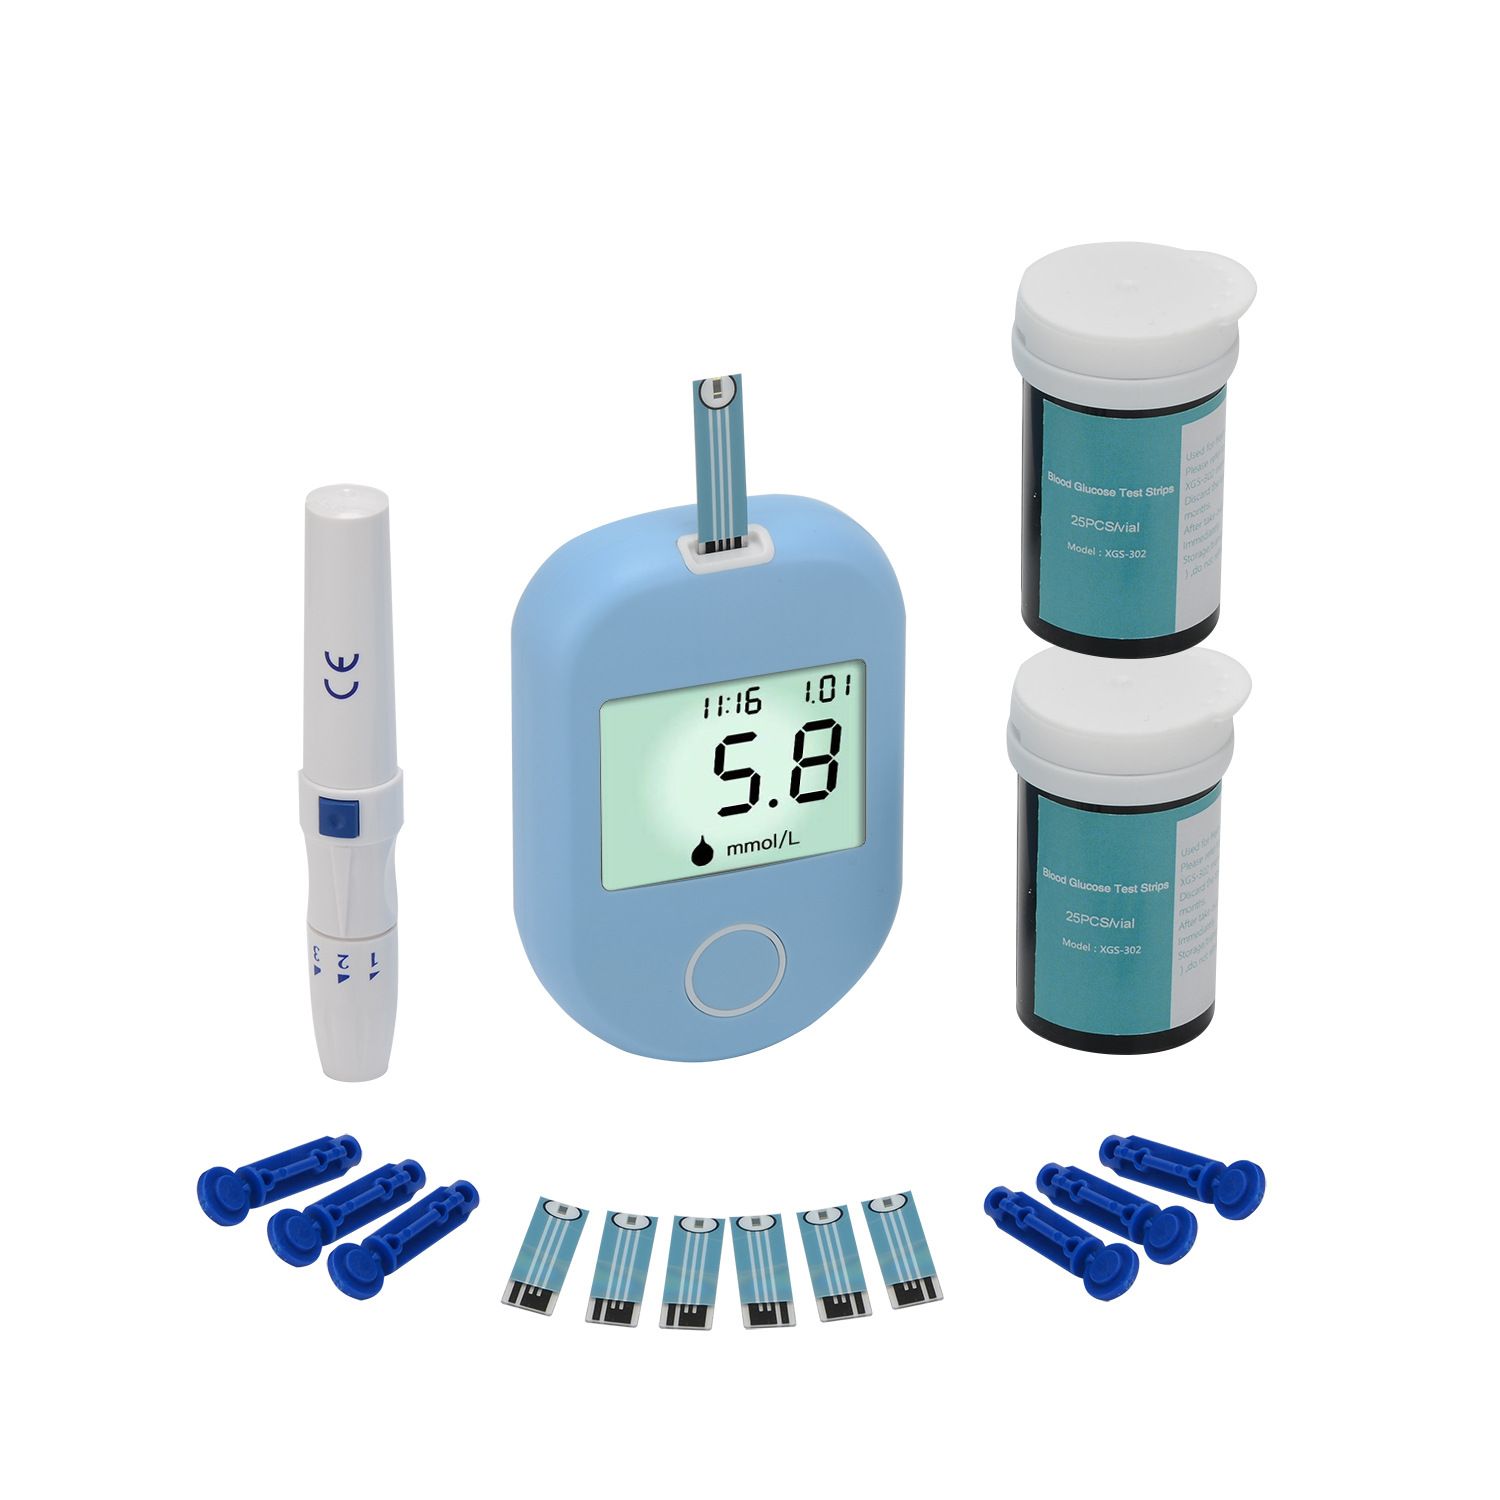 Тест сахара в крови купить. Blood glucose Meter xg803. Глюкометр medico bg-202. Cell 1 аппарат для измерения крови. Глюкометр GX 803.